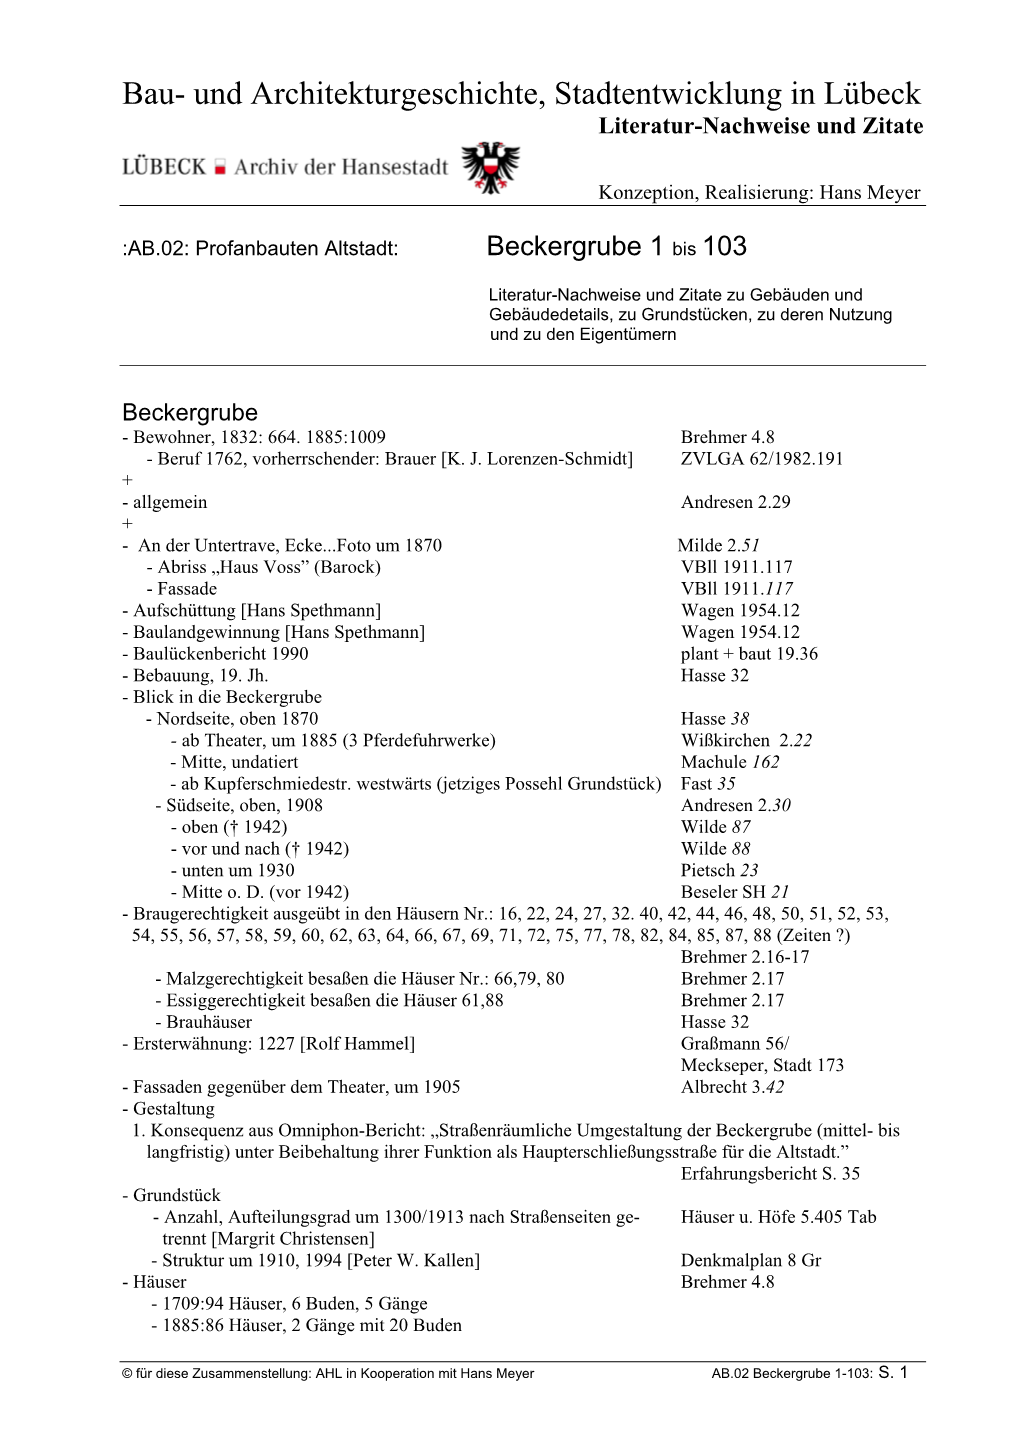 AB.02: Beckergrube 1-103